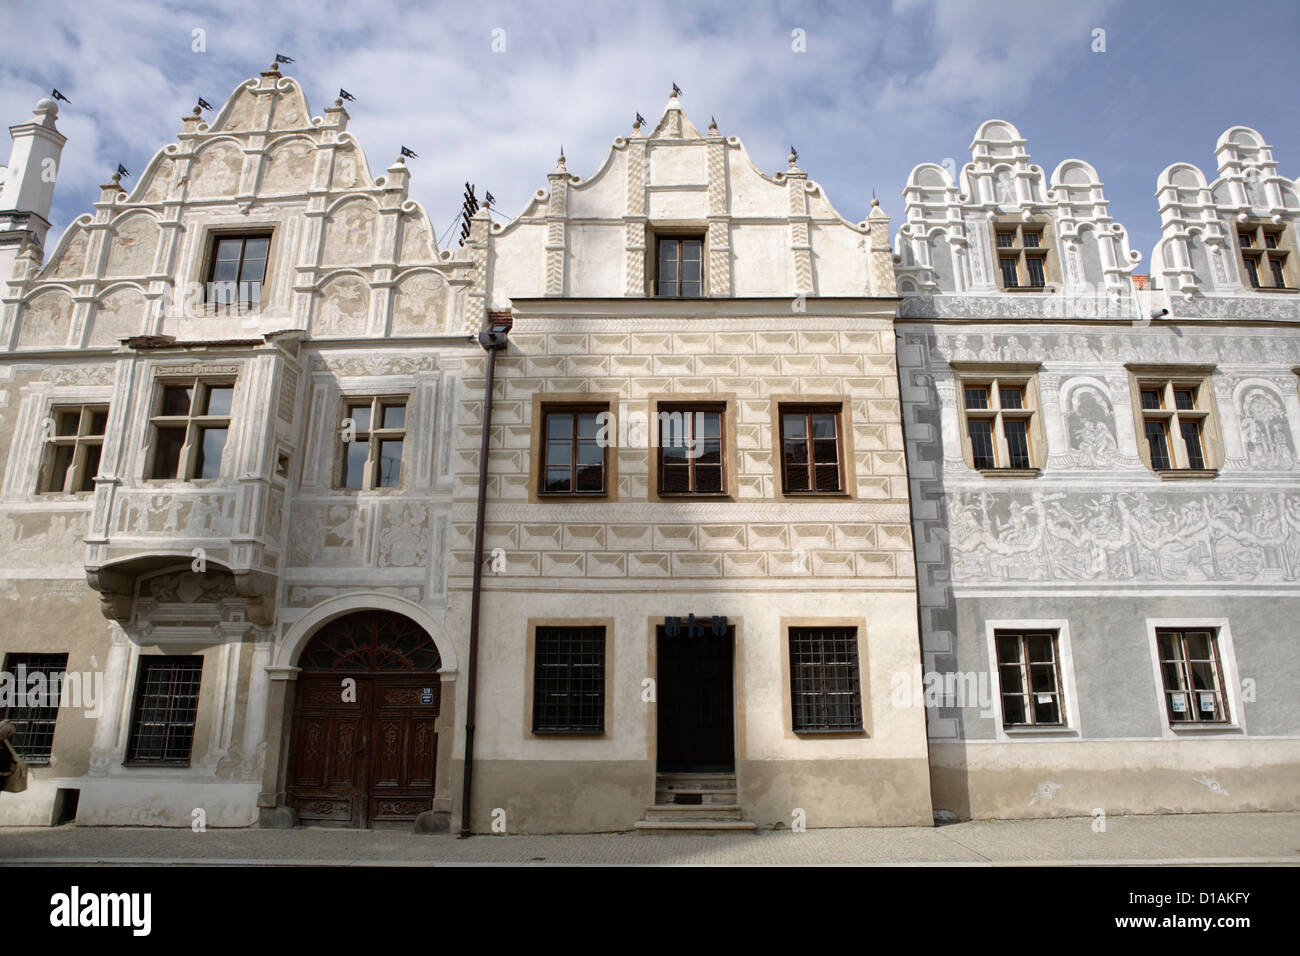 Sgraffito, Sgraffitti, Scraffito, house facade, Slavonice, Zlabings, Tschechien, Tschechische Republik, Czech Republic, Europe Stock Photo